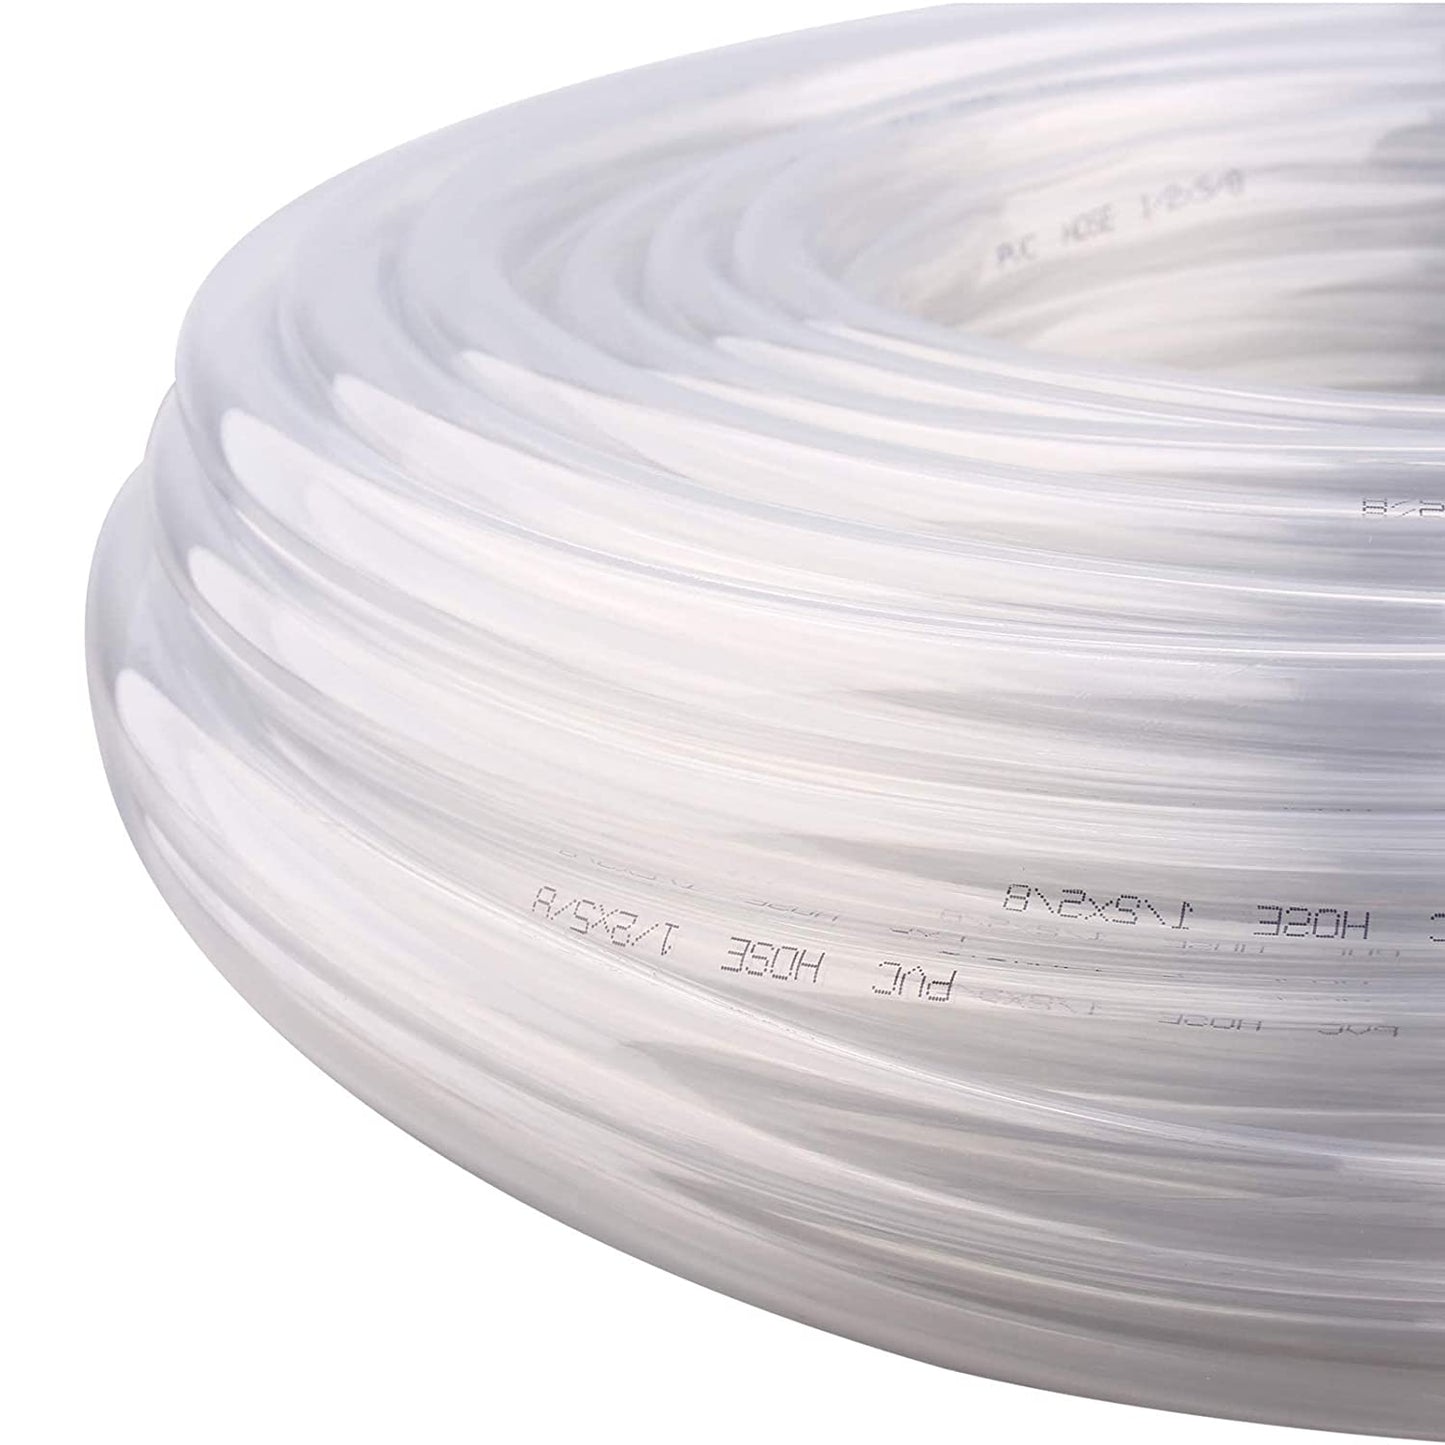 PVC Tubing 1/2"ID X 5/8"OD Flexible Clear Vinyl Hose 100 Feet for Food Grade